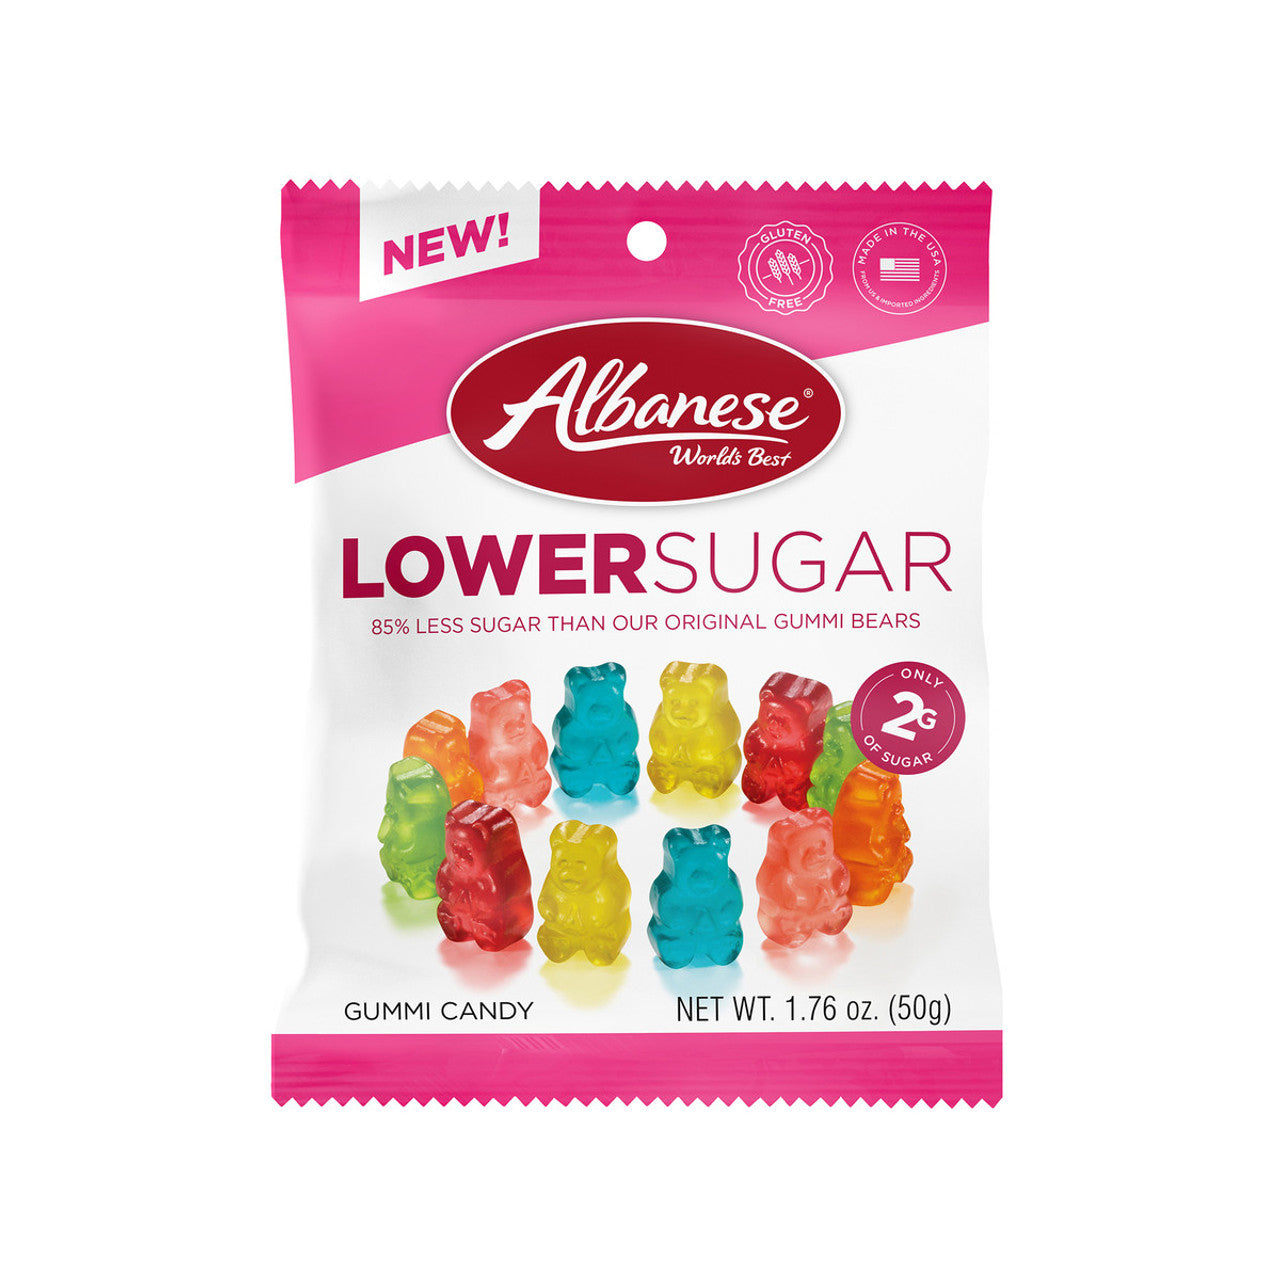 Lower Sugar 6 Flavor Gummi Bears 1.76oz.